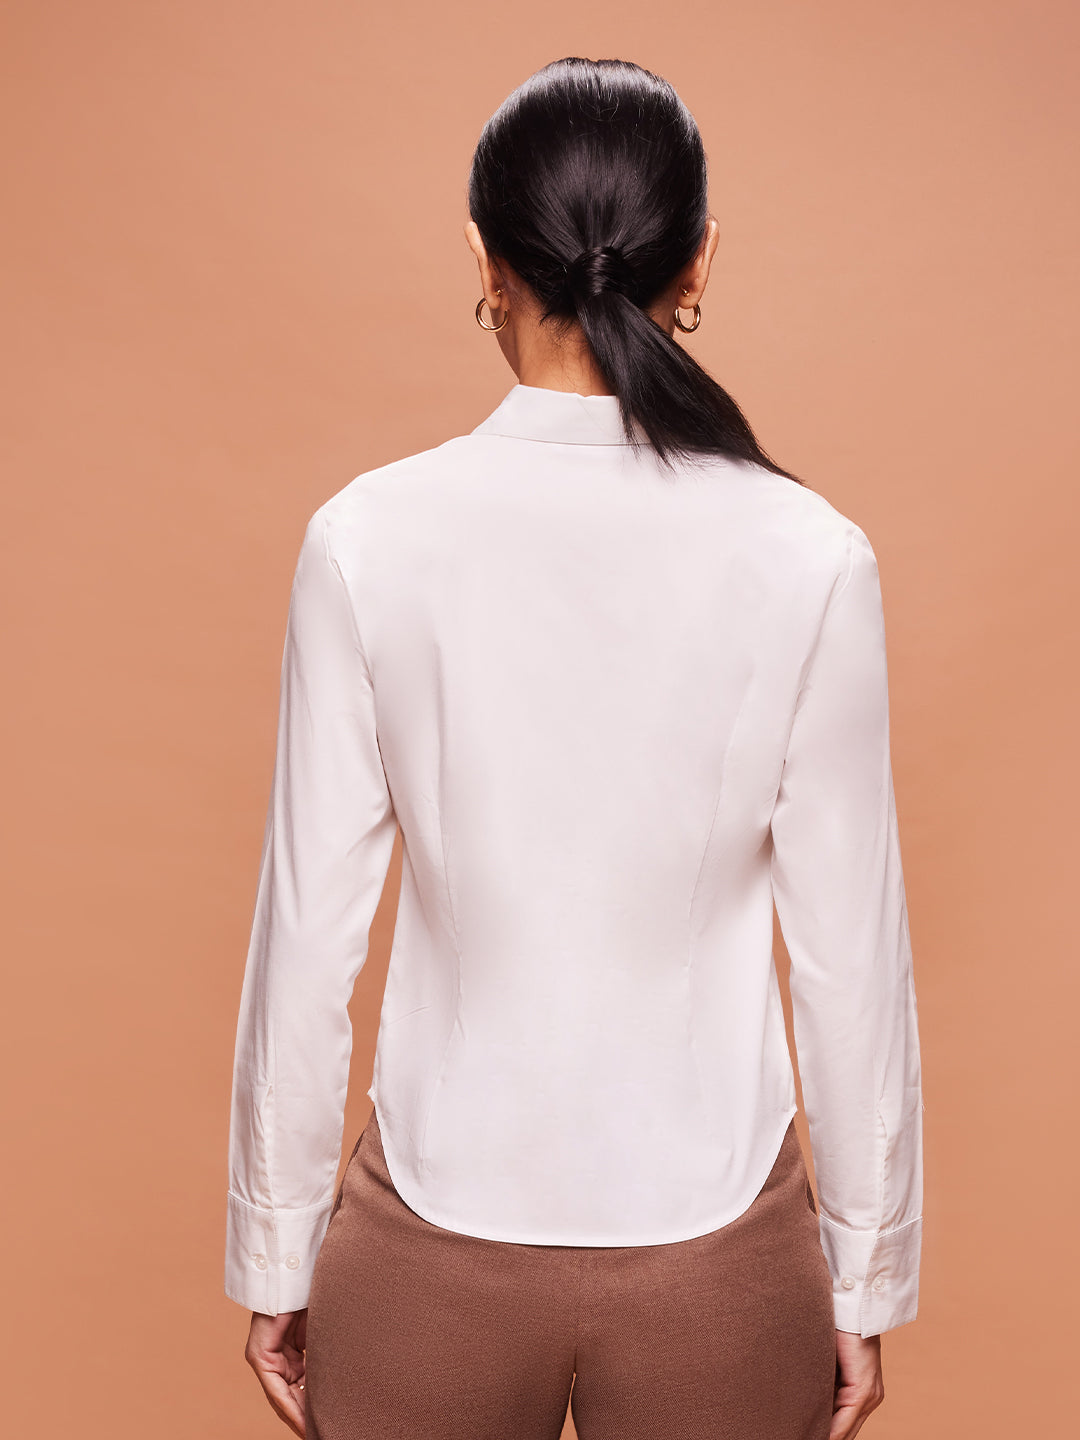 Bombay High Women's Bright White Solid Premium Cotton Slim Fit Shirt